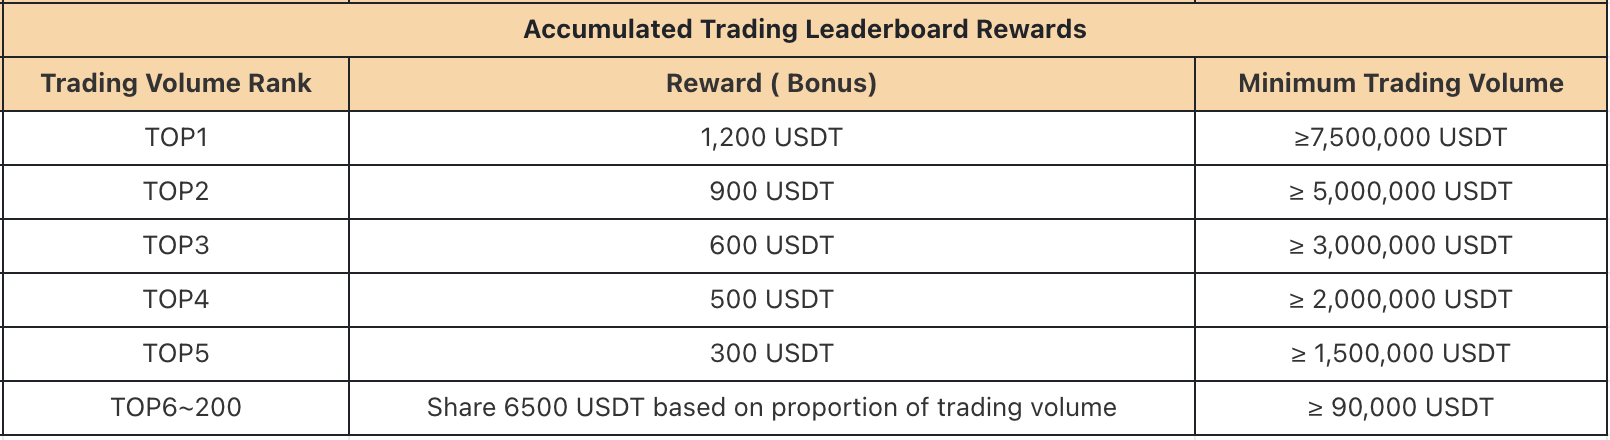 Accumulated Trading Leaderboard Rewards